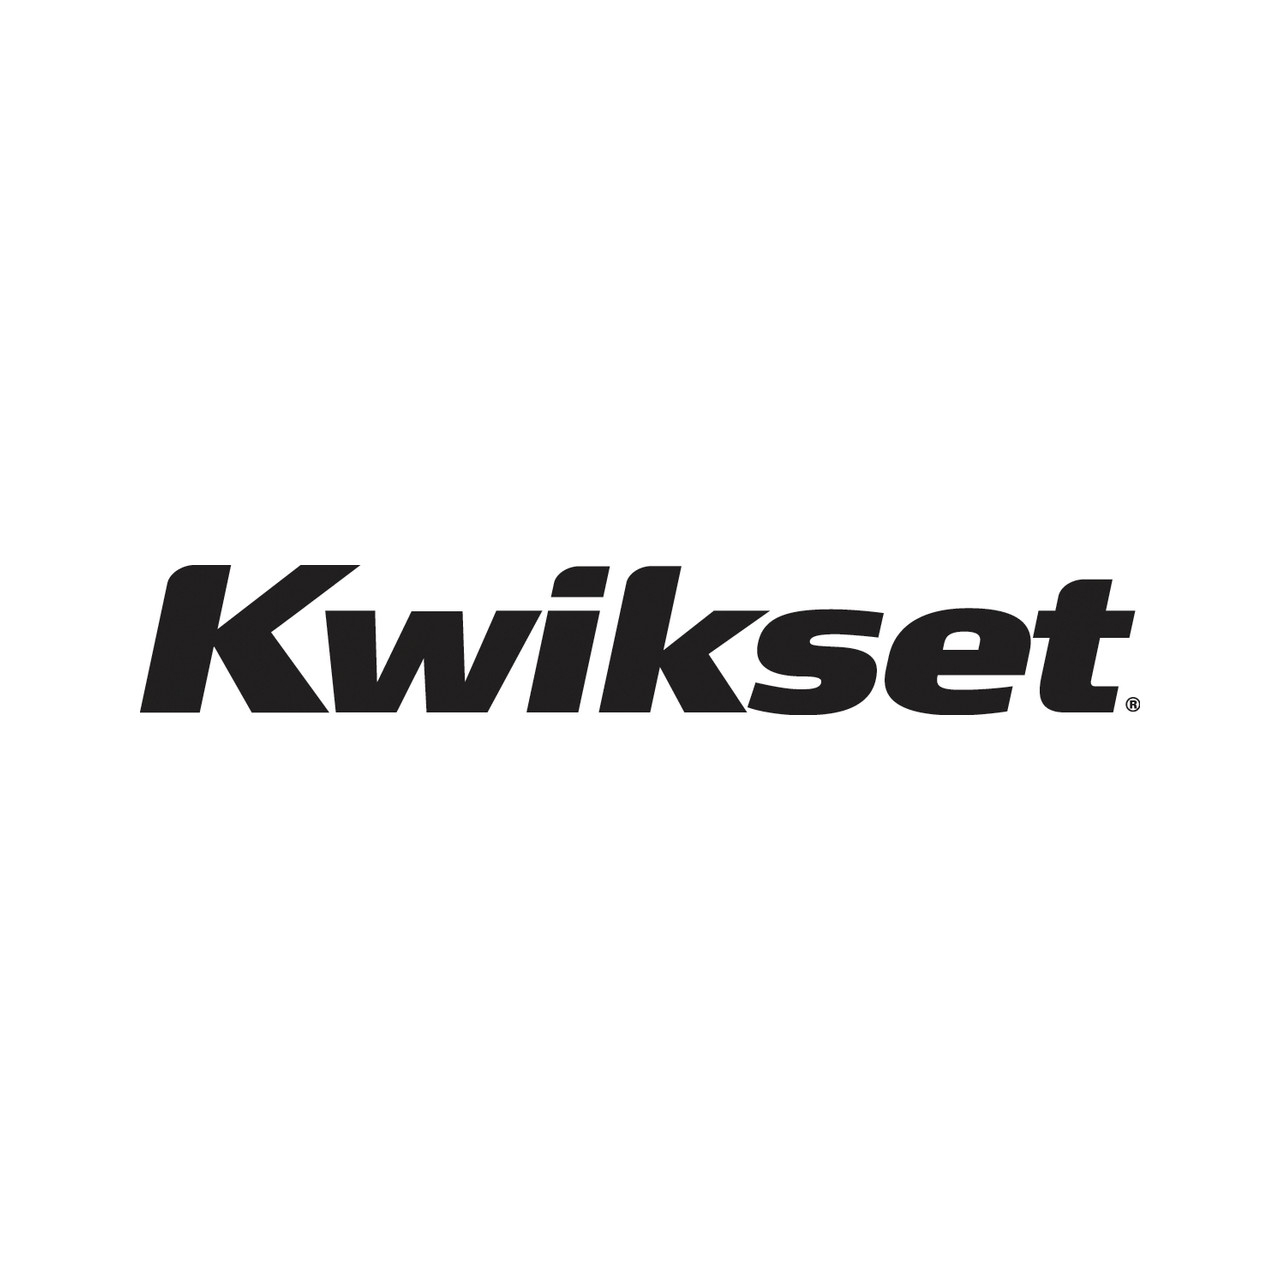 Kwikset Logo 1280x1280.jpg